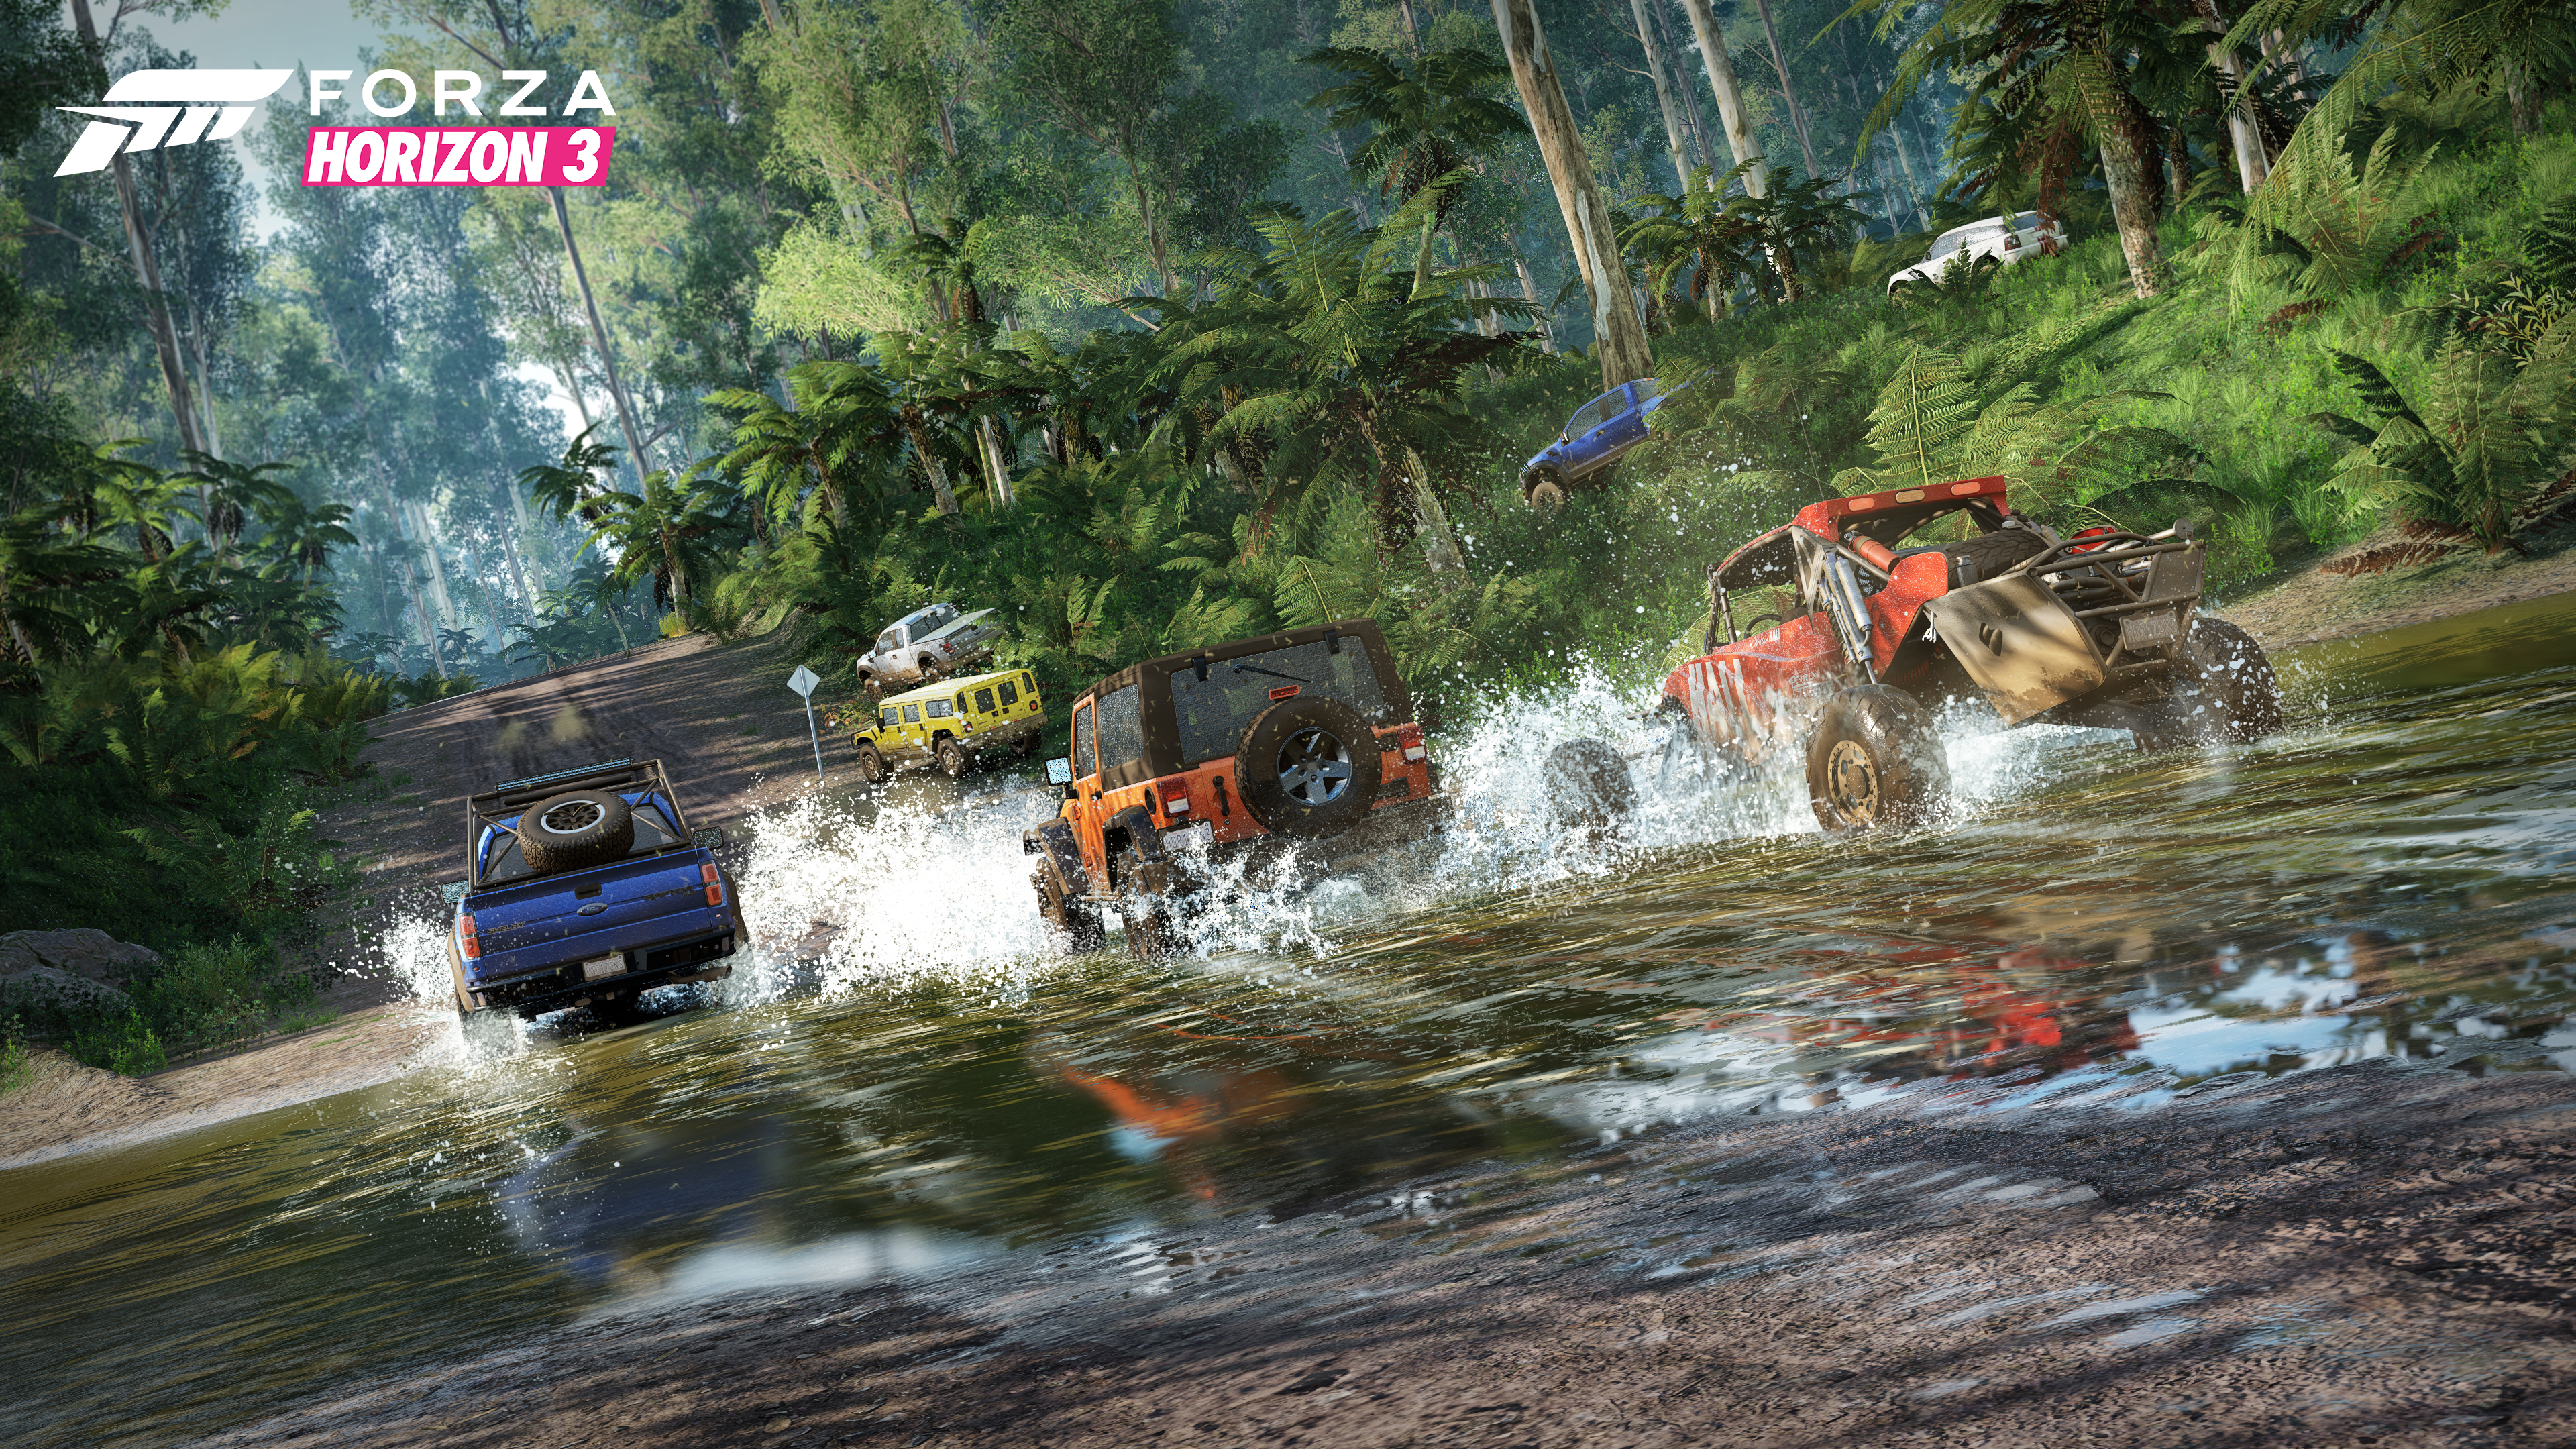 General 3840x2160 Forza Horizon 3 video games CGI logo water race cars road car nature